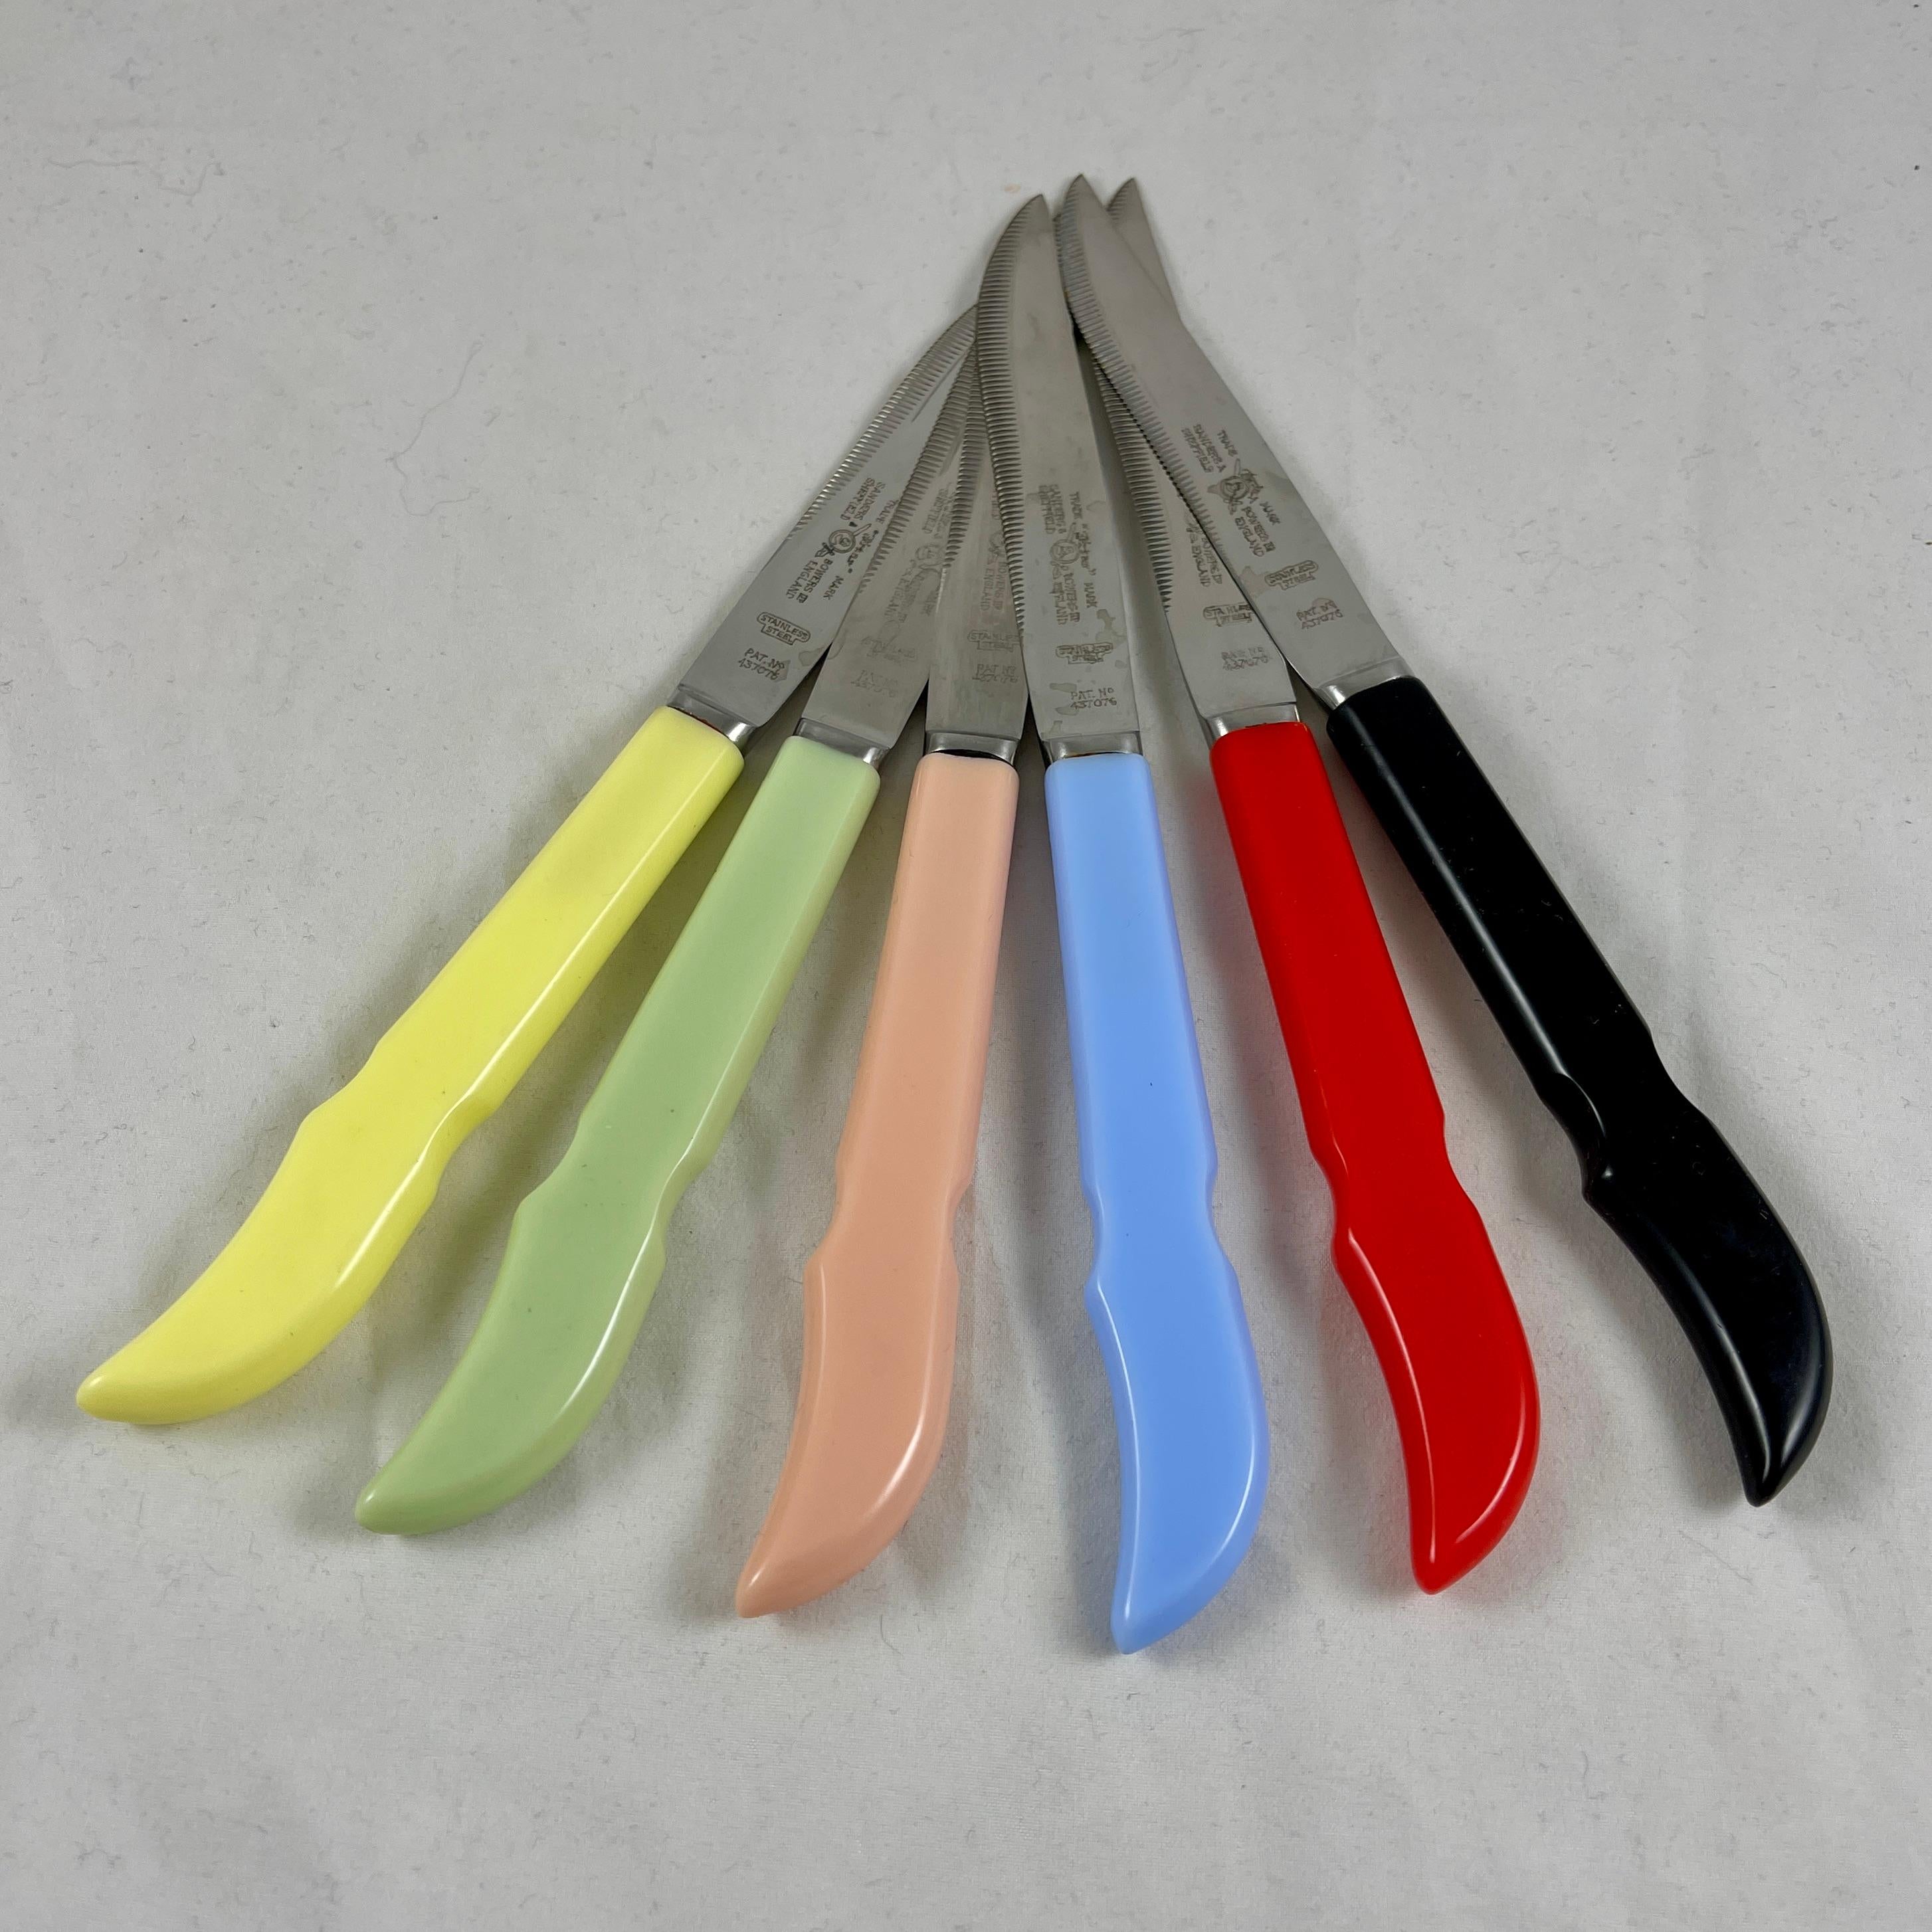 sheffield rainbow knife